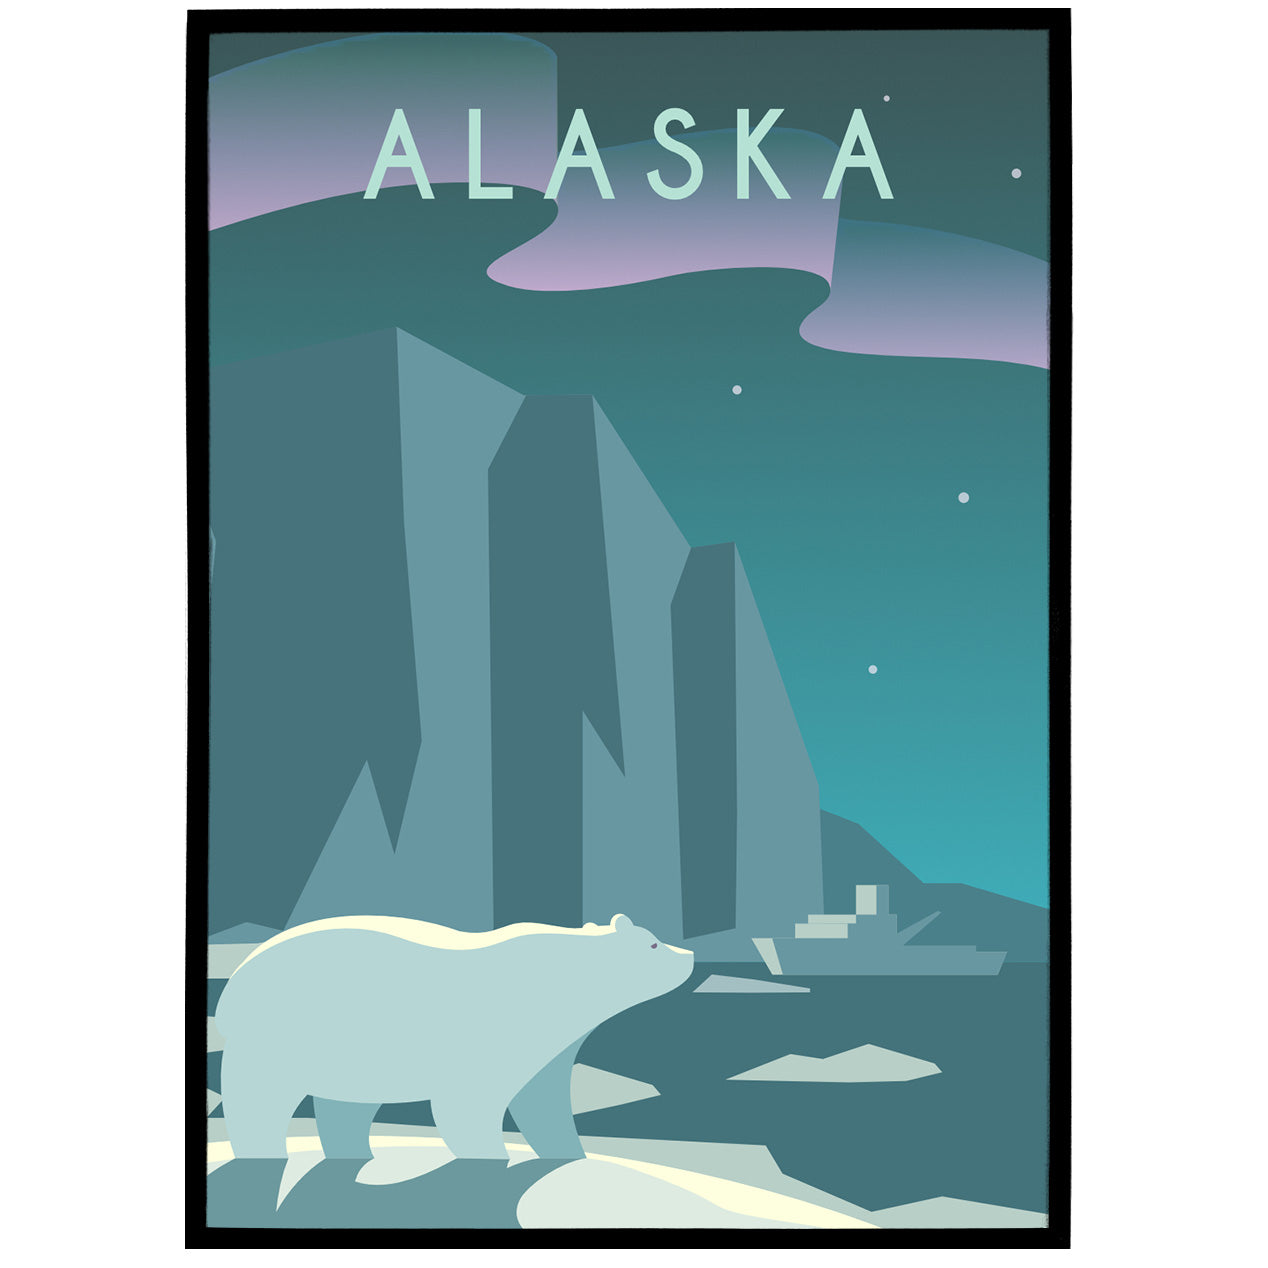 ALASKA - minimalist travel poster